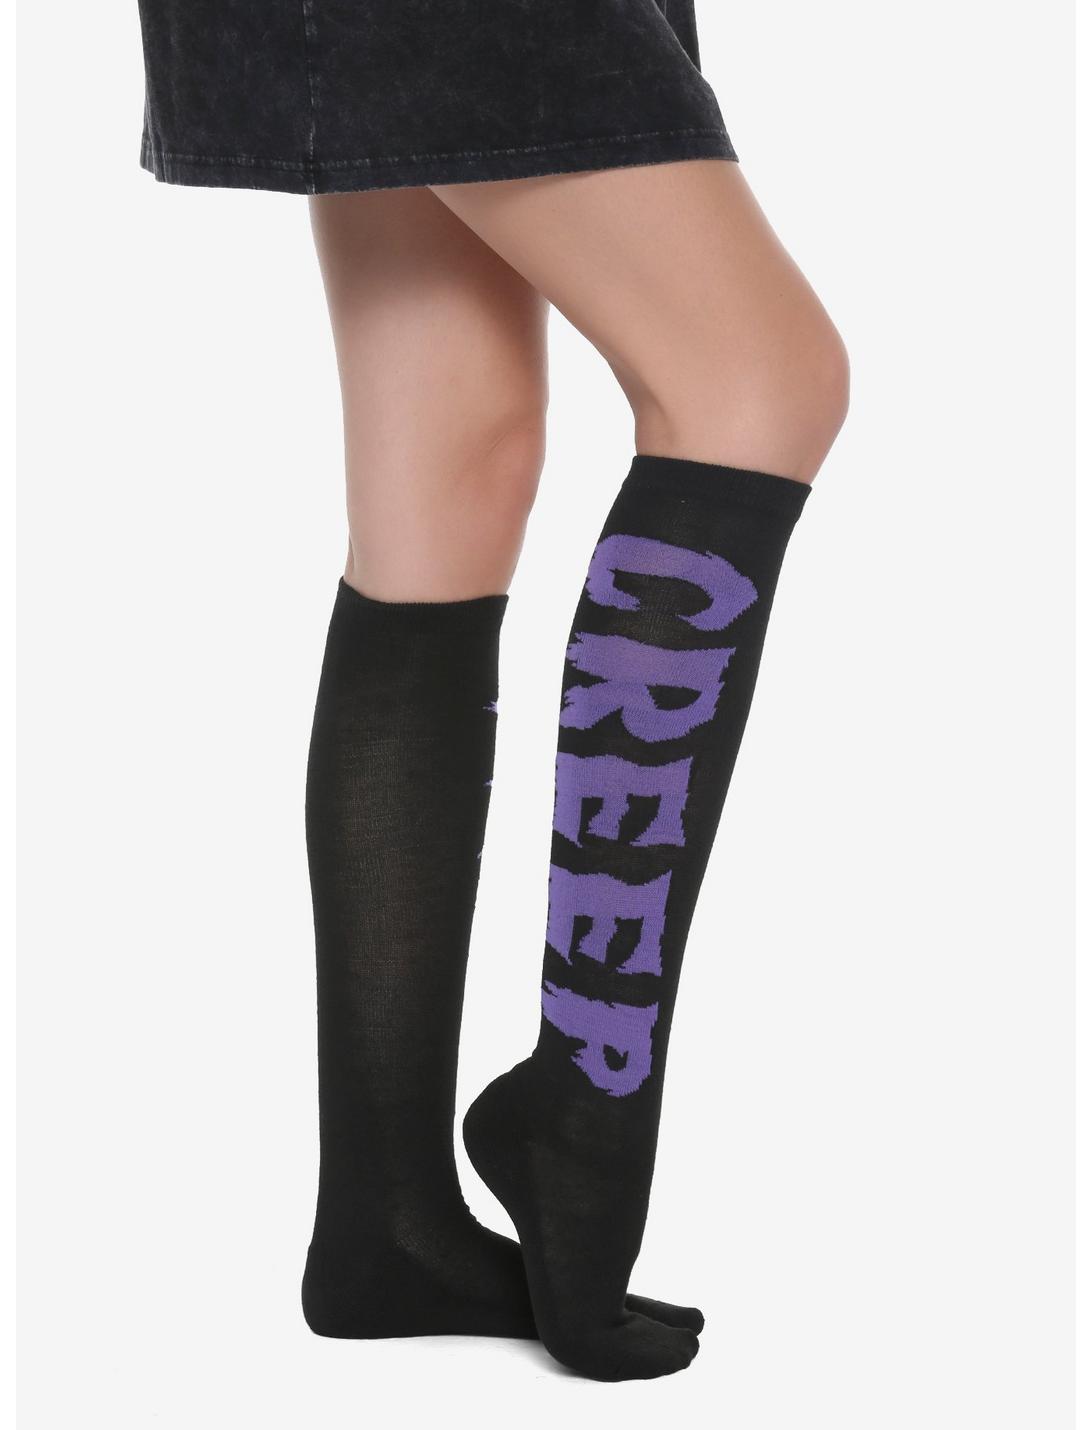 Creep Knee-High Socks, , hi-res